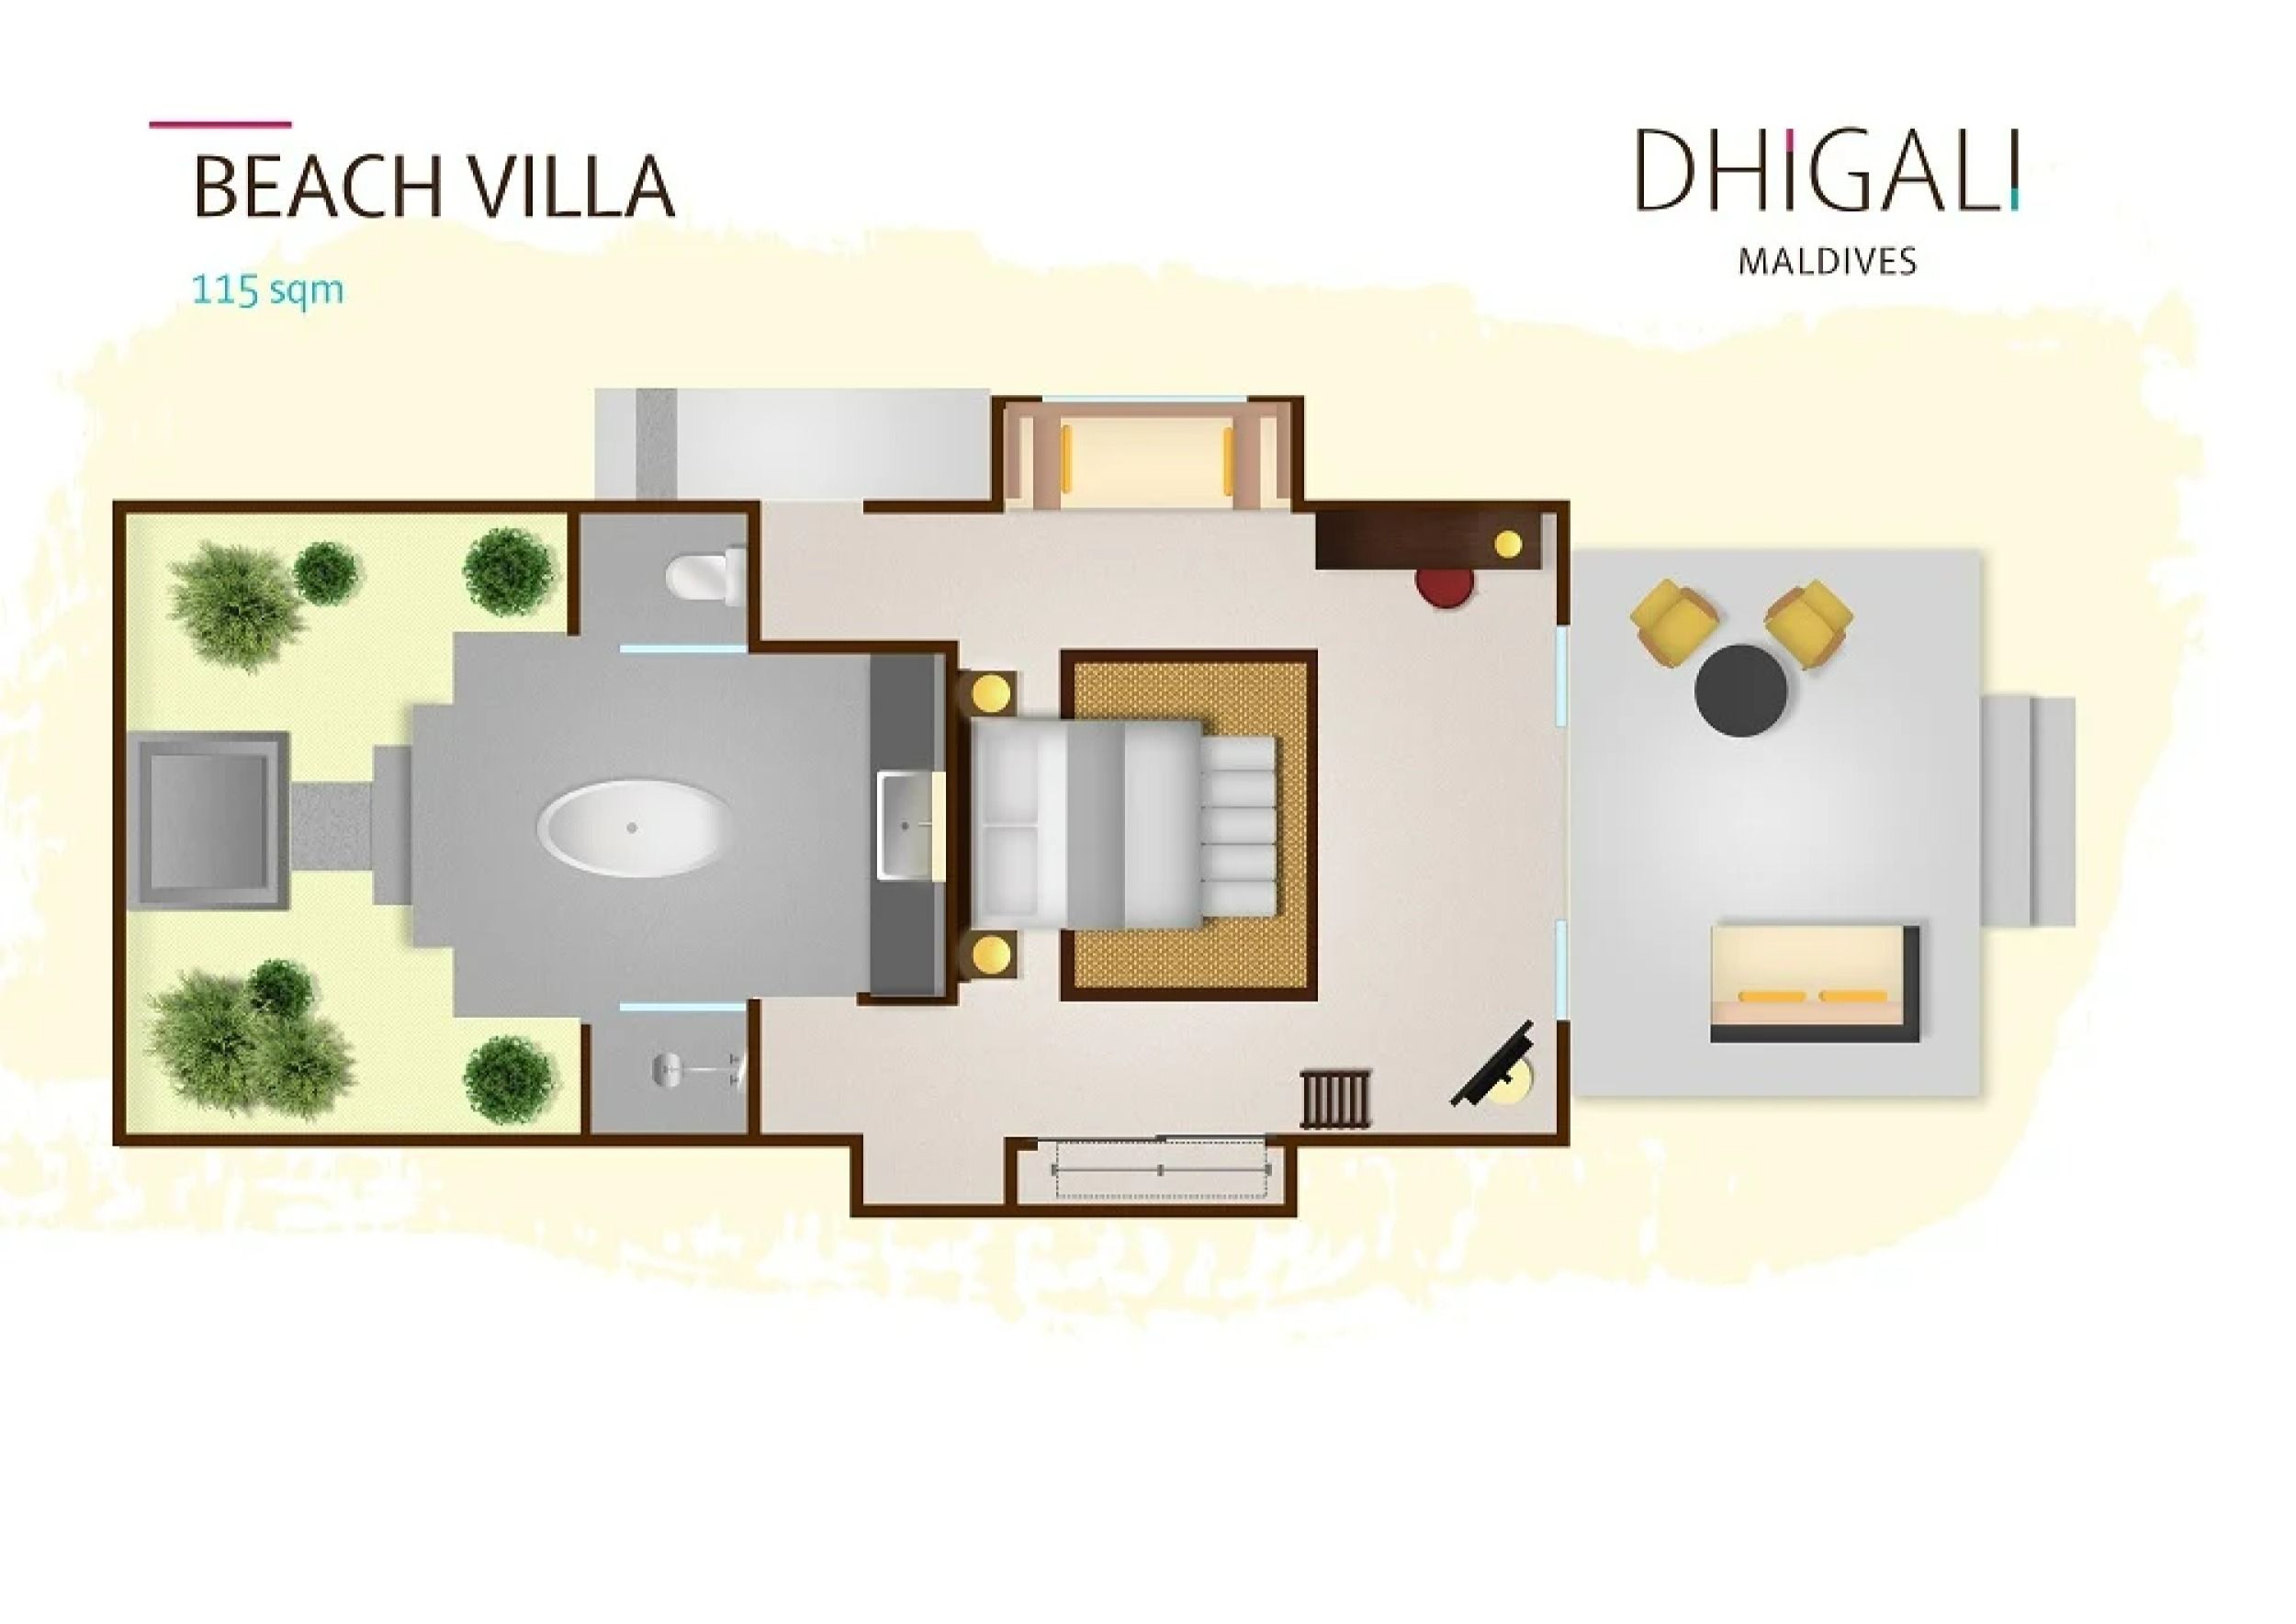 Beach Villa - Floor plan - Dhigali Maldives